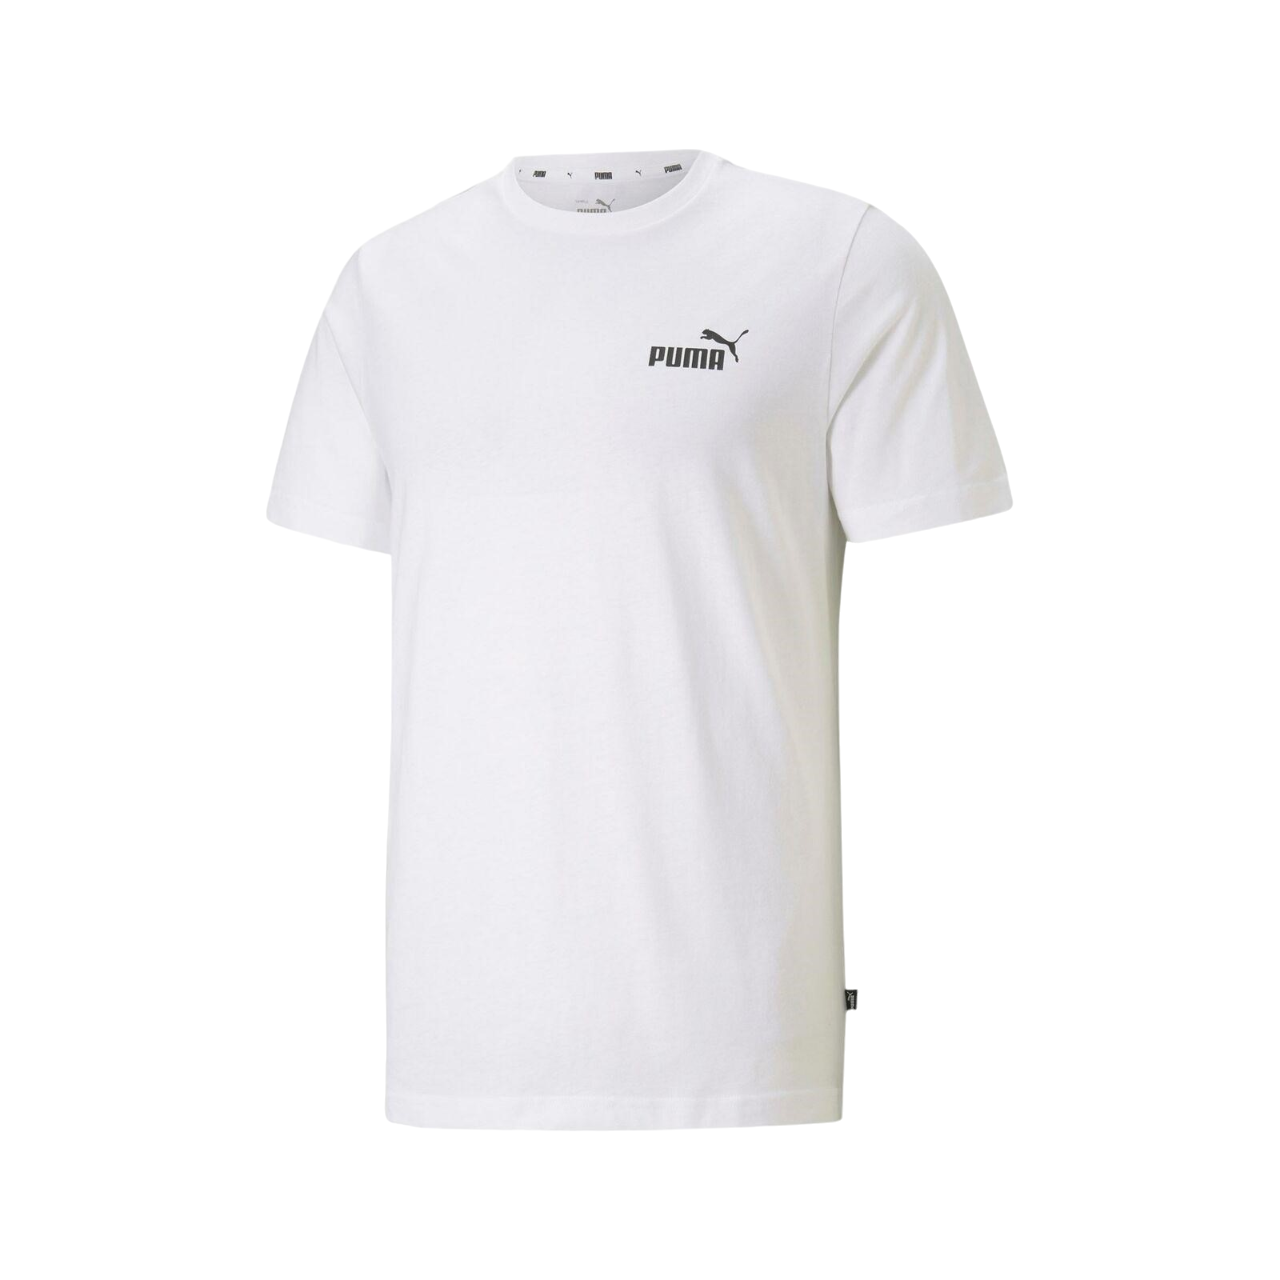 Puma maglietta manica corta da uomo Ess 586776 02 bianco